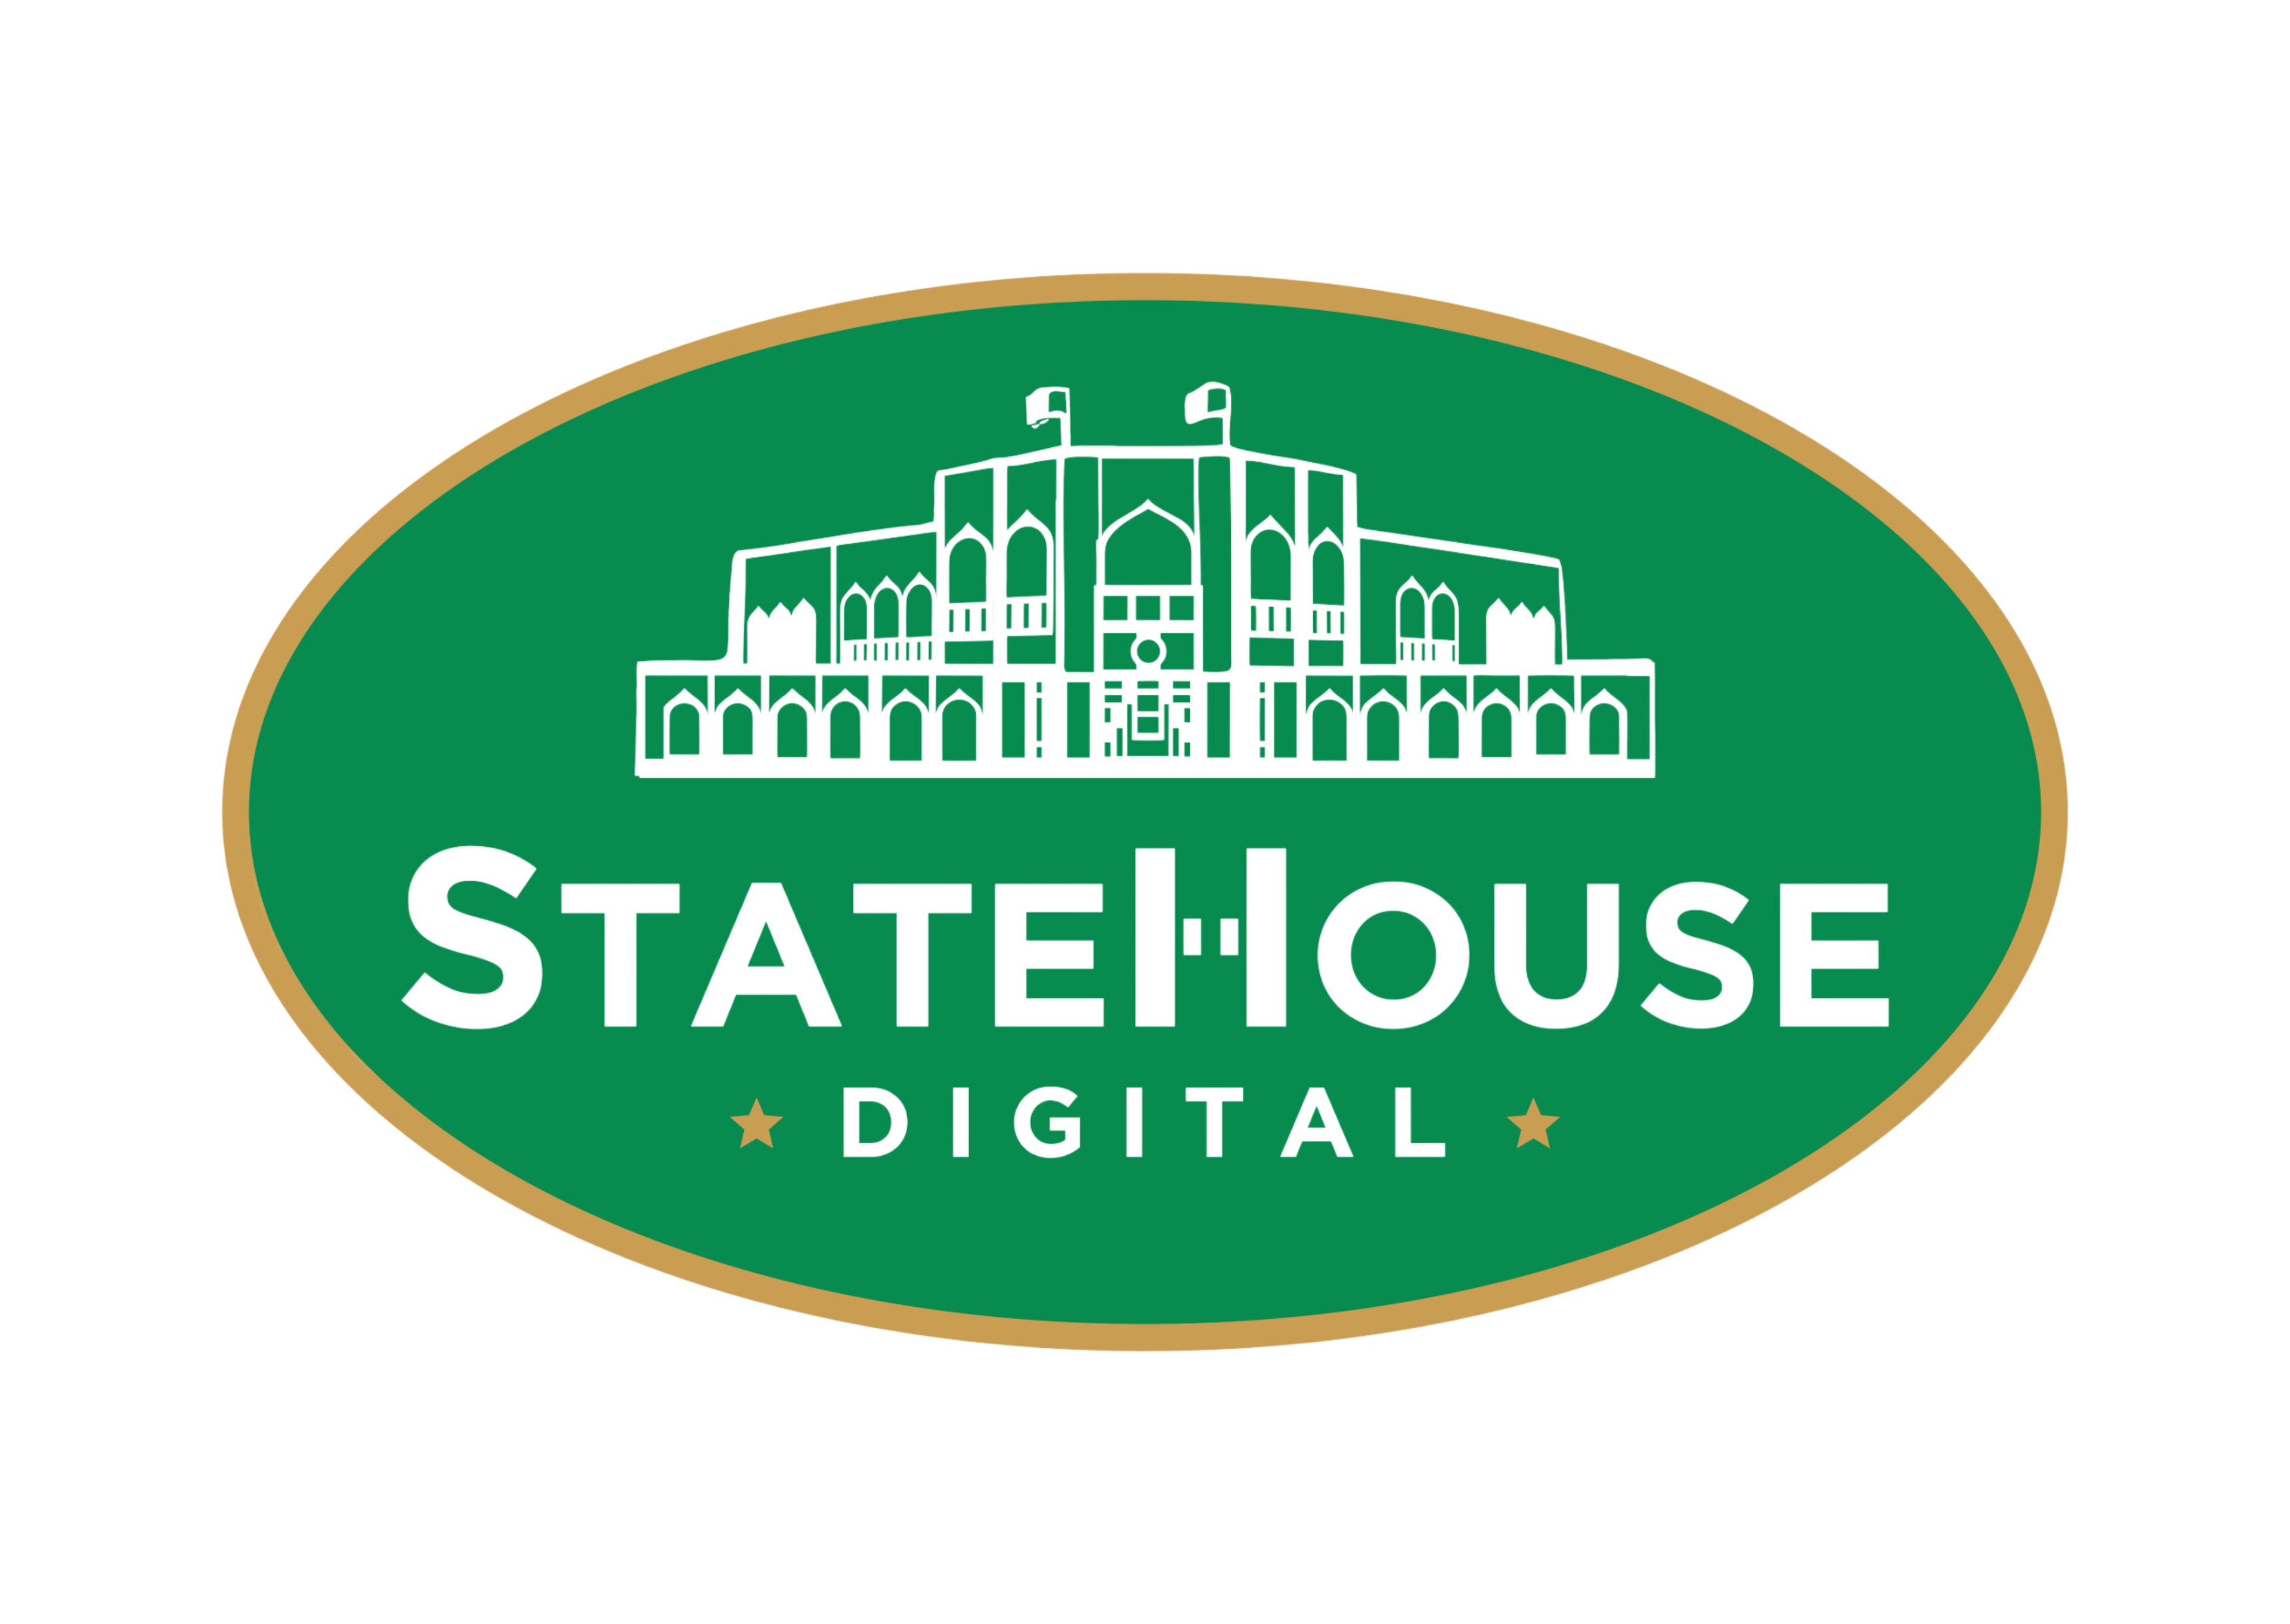 State House- Digital